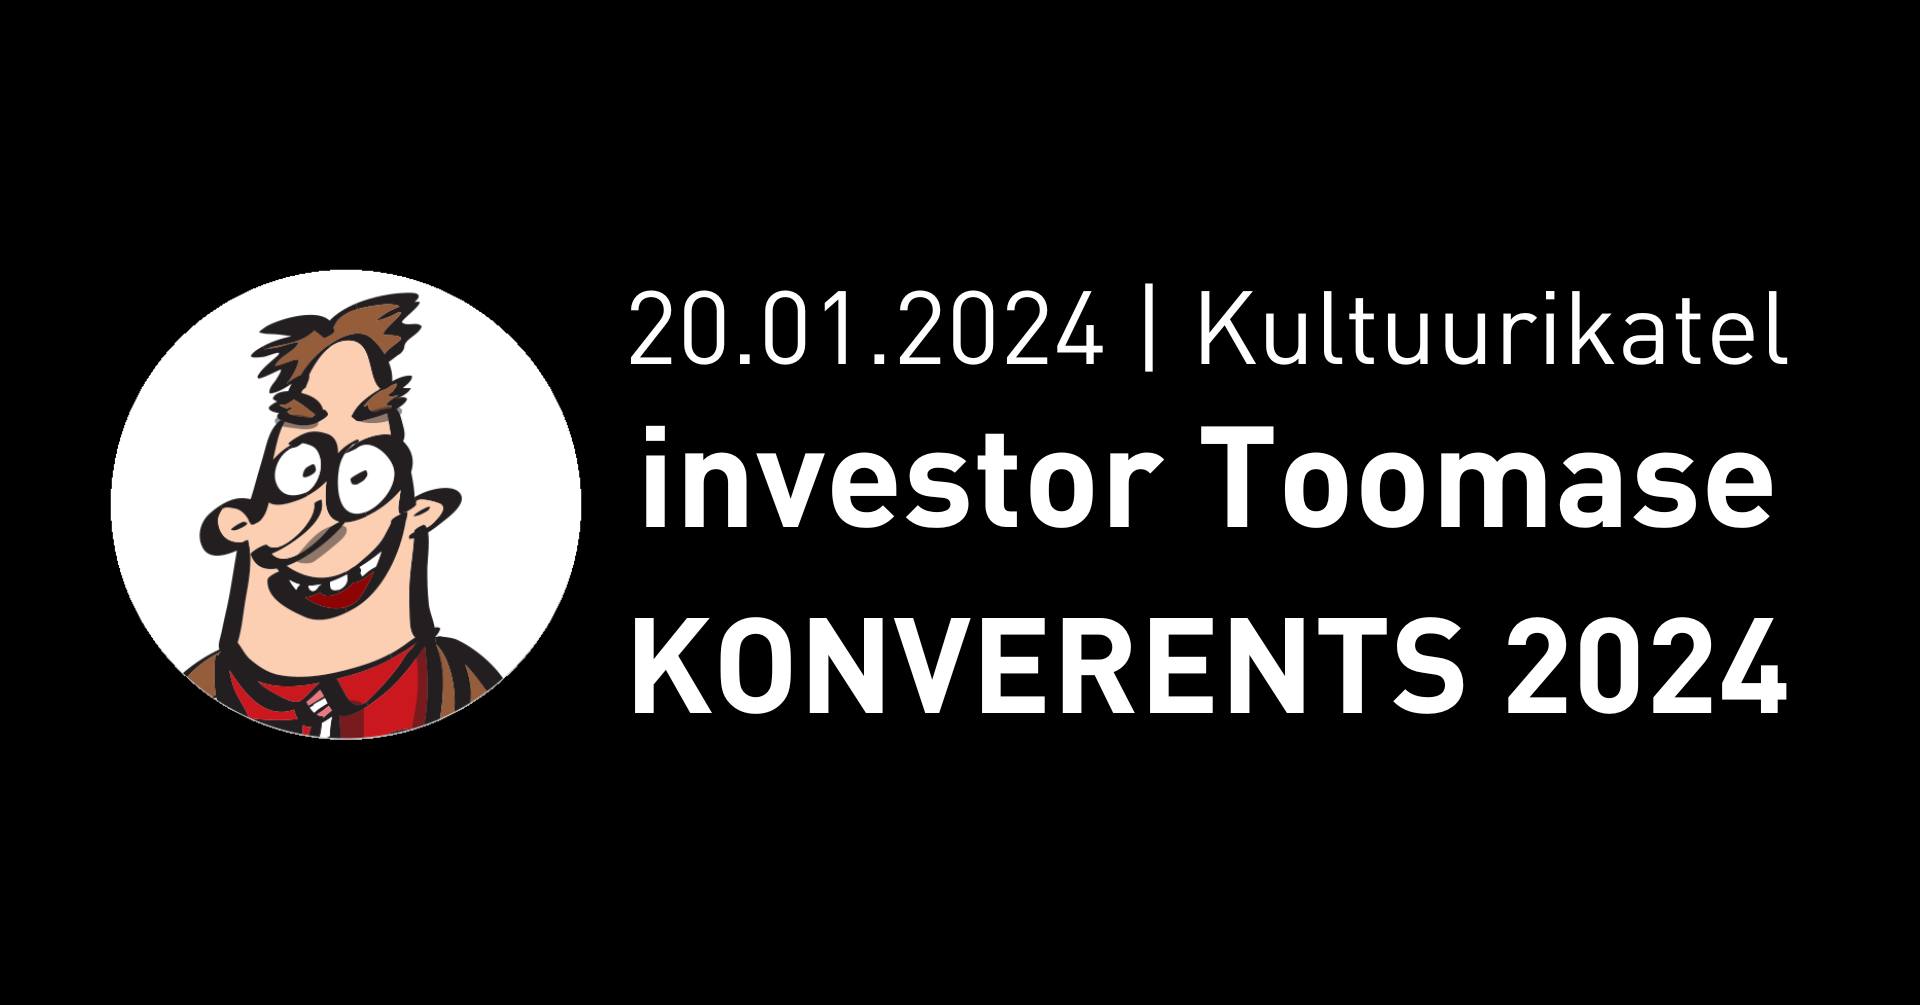 16165Investor Toomase konverents 2024